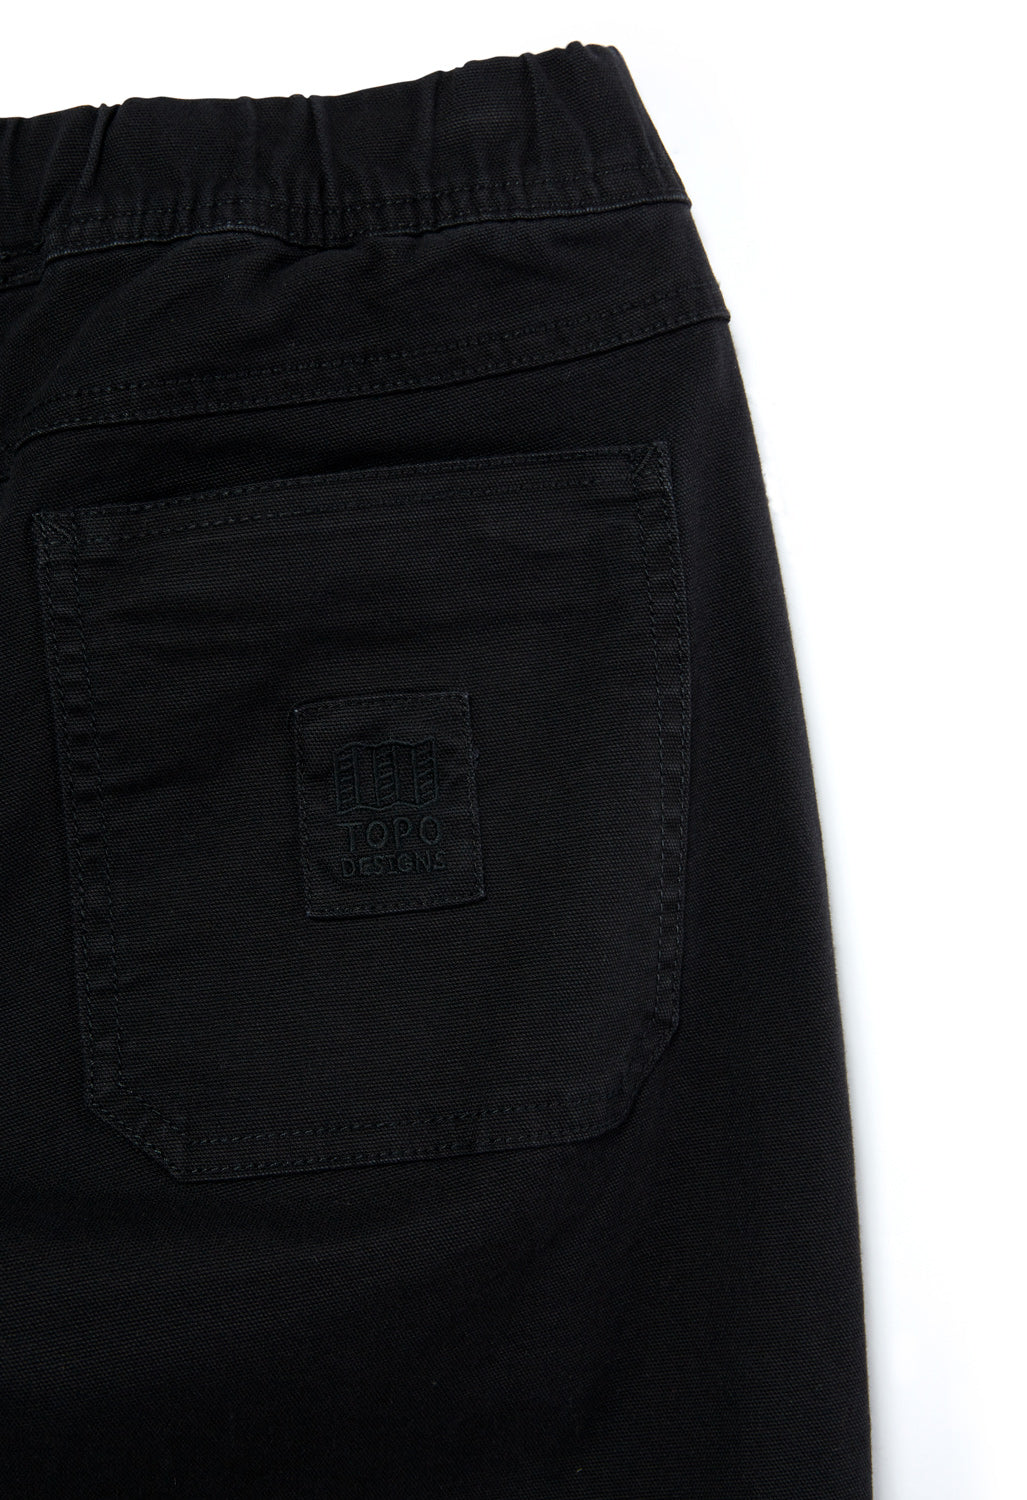 Topo Designs Women's Dirt Pants - Black